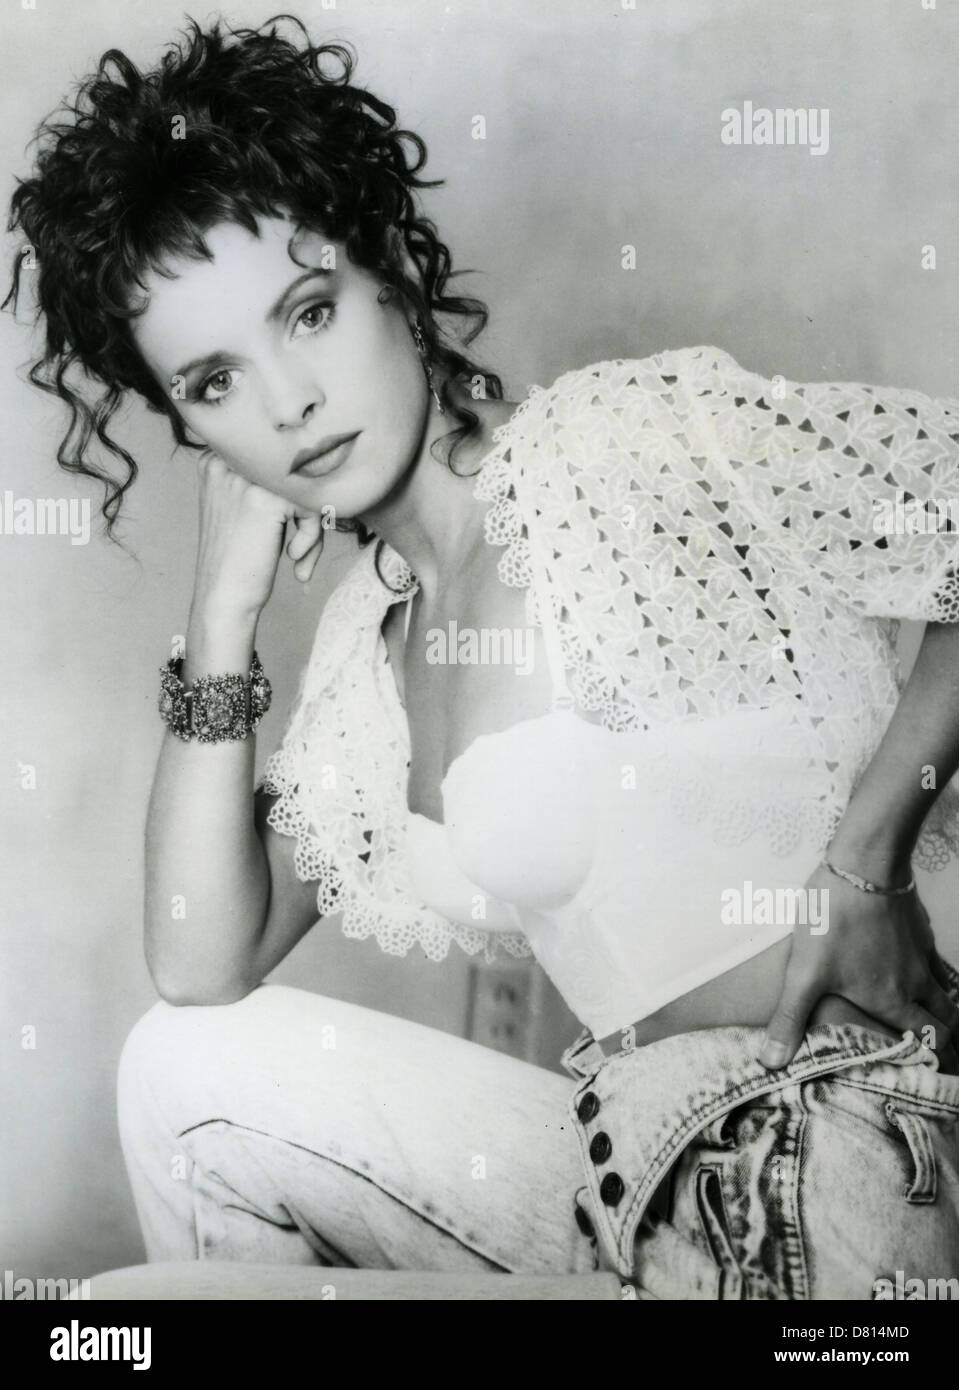 SHEENA EASTON  Promotional photo of Scottish pop singer about 1988 Stock Photo